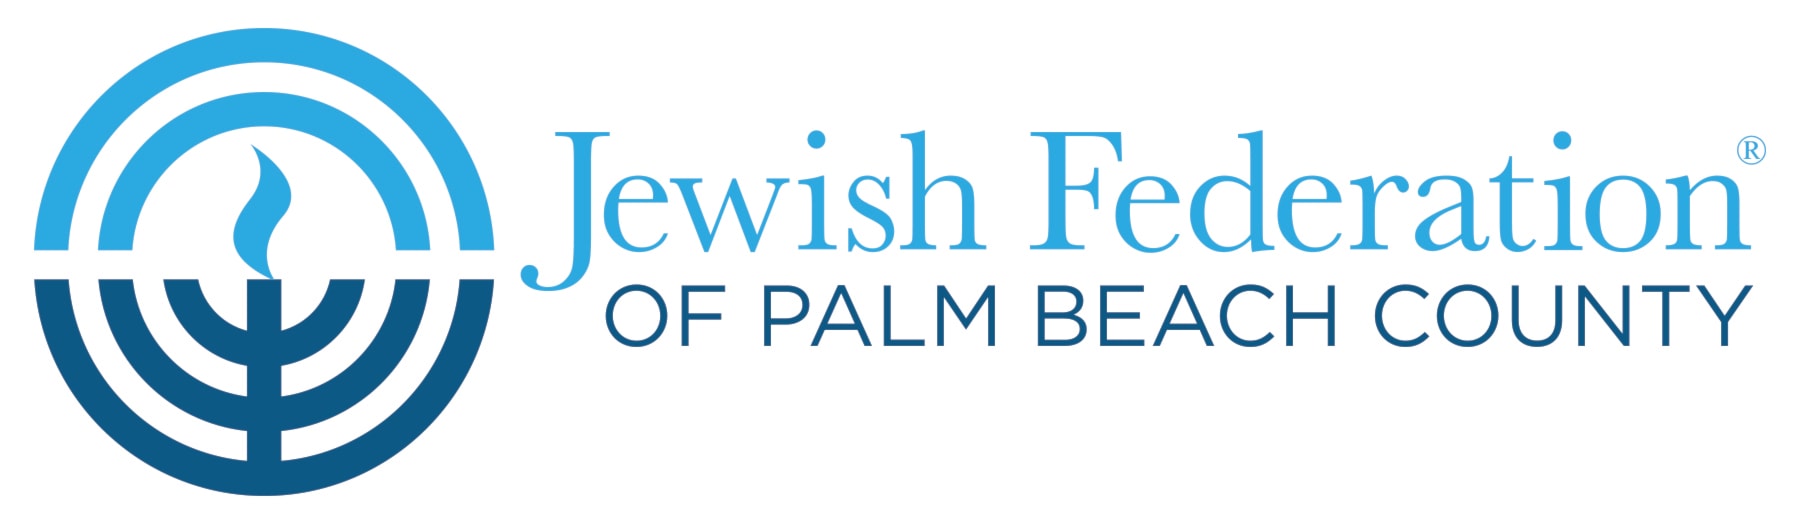 Jewish Federation of Palm Beach County